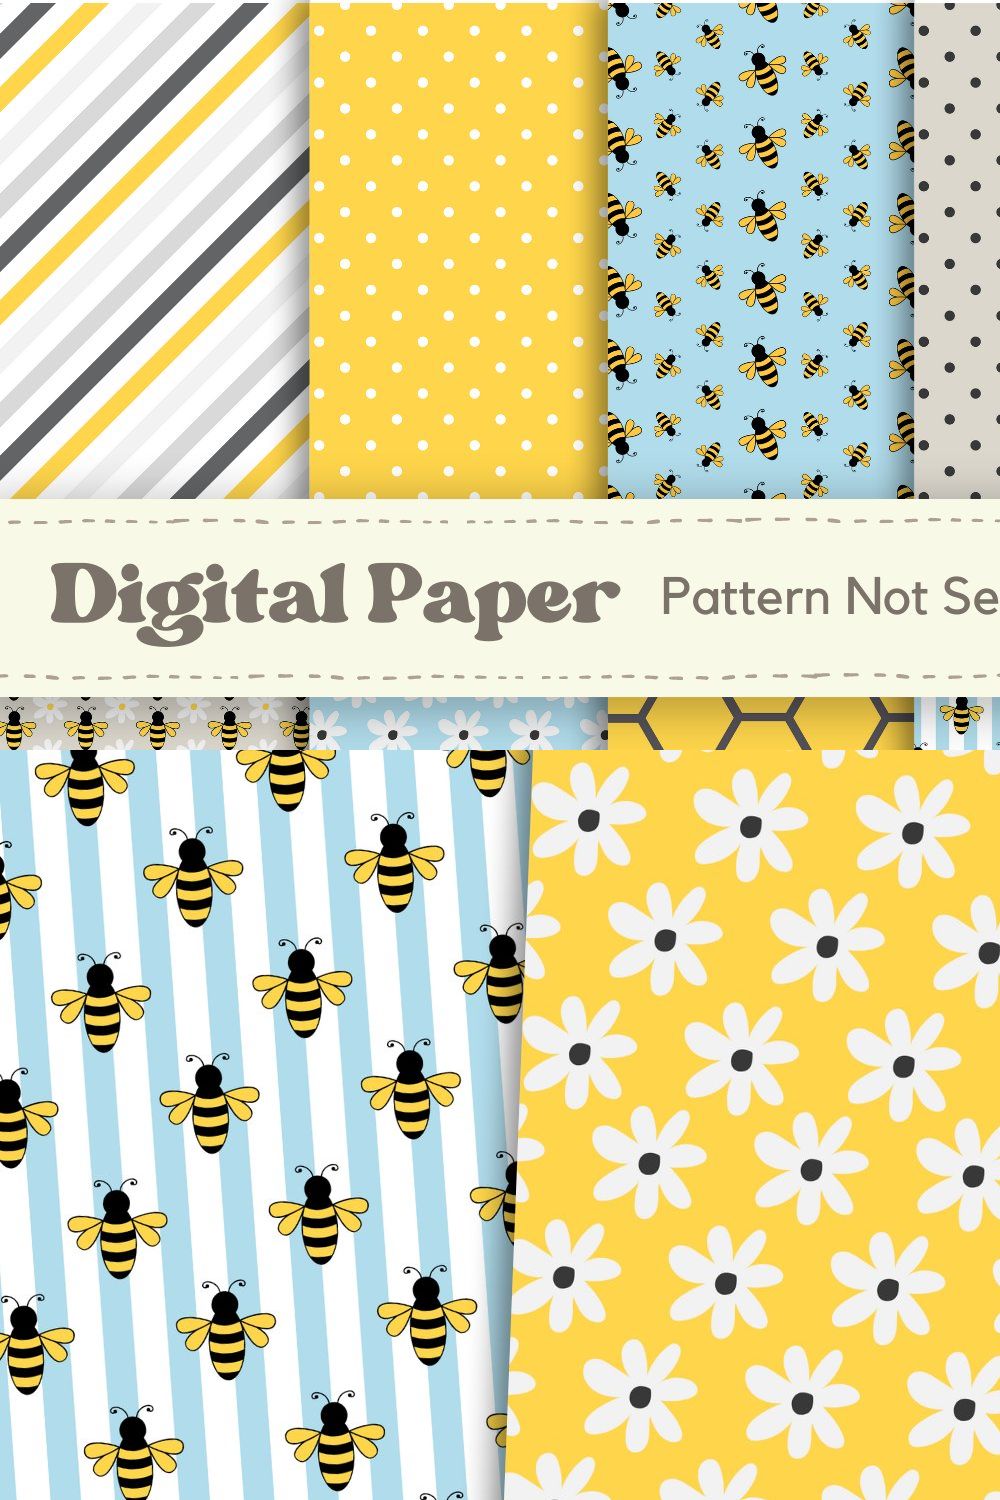 Honey & Bees Digital Paper Patterns pinterest preview image.